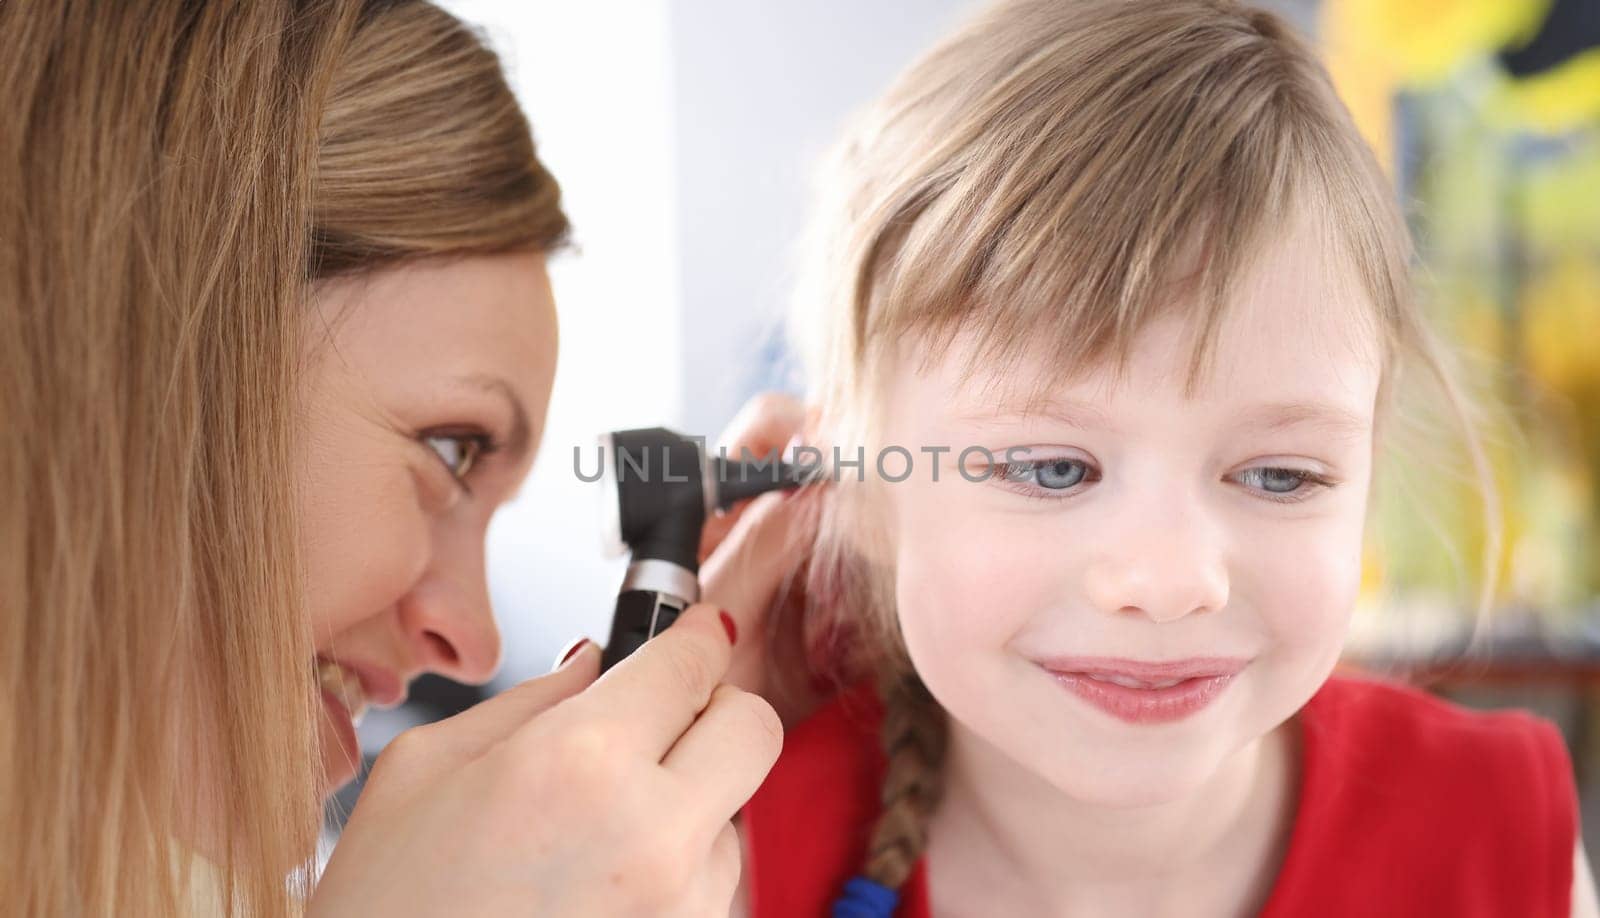 Otorhinolaryngologist looking at sore ear of little girl by kuprevich